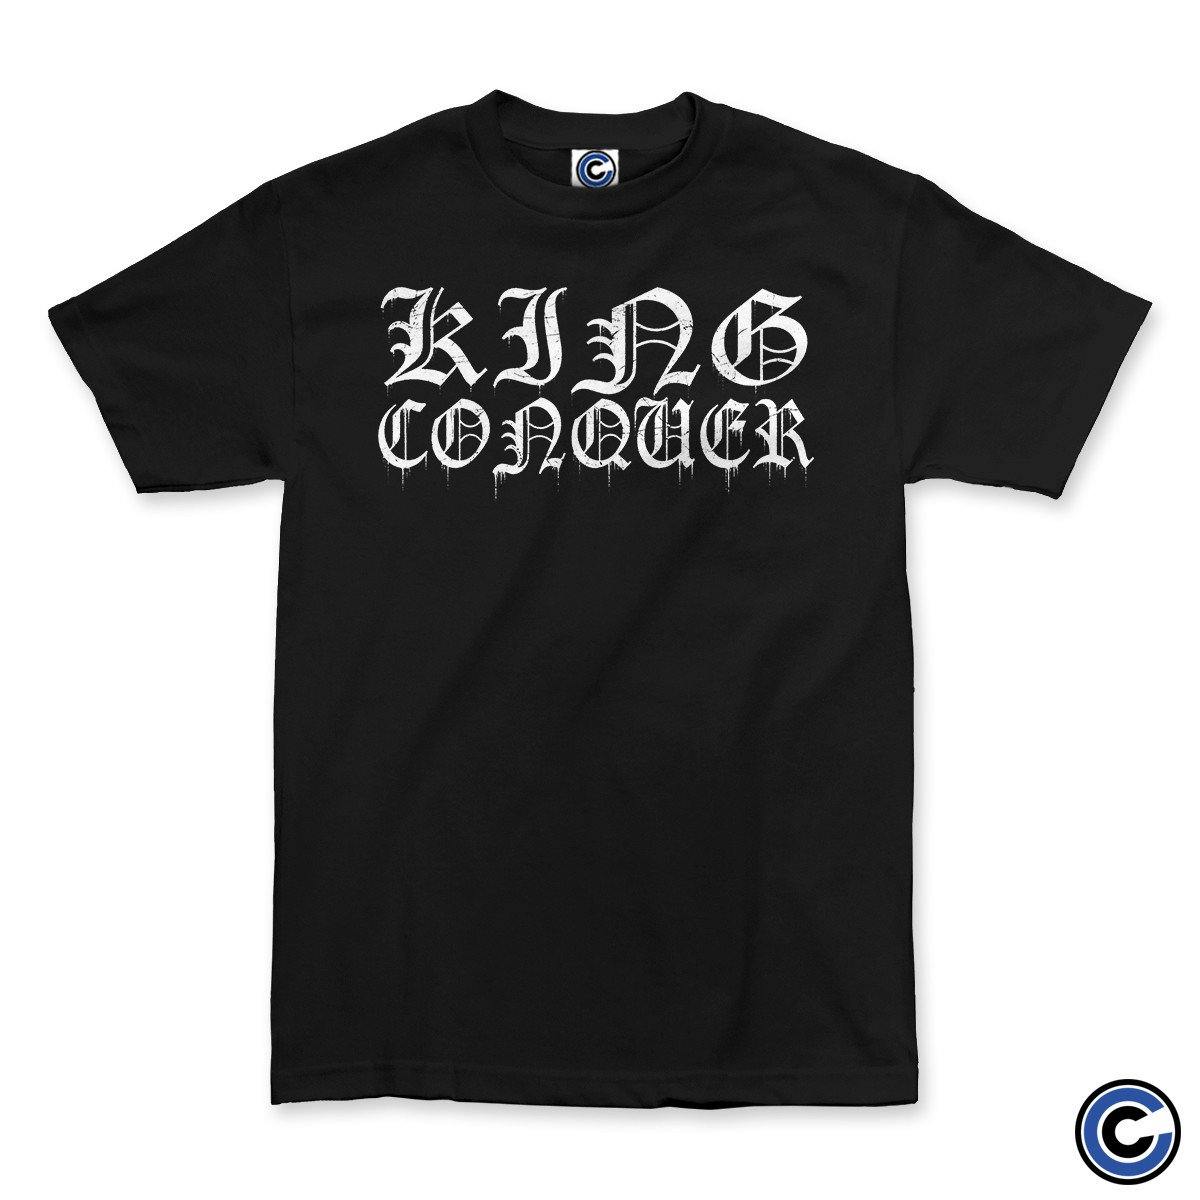 Buy – King Conquer "Olde E" Shirt – Band & Music Merch – Cold Cuts Merch